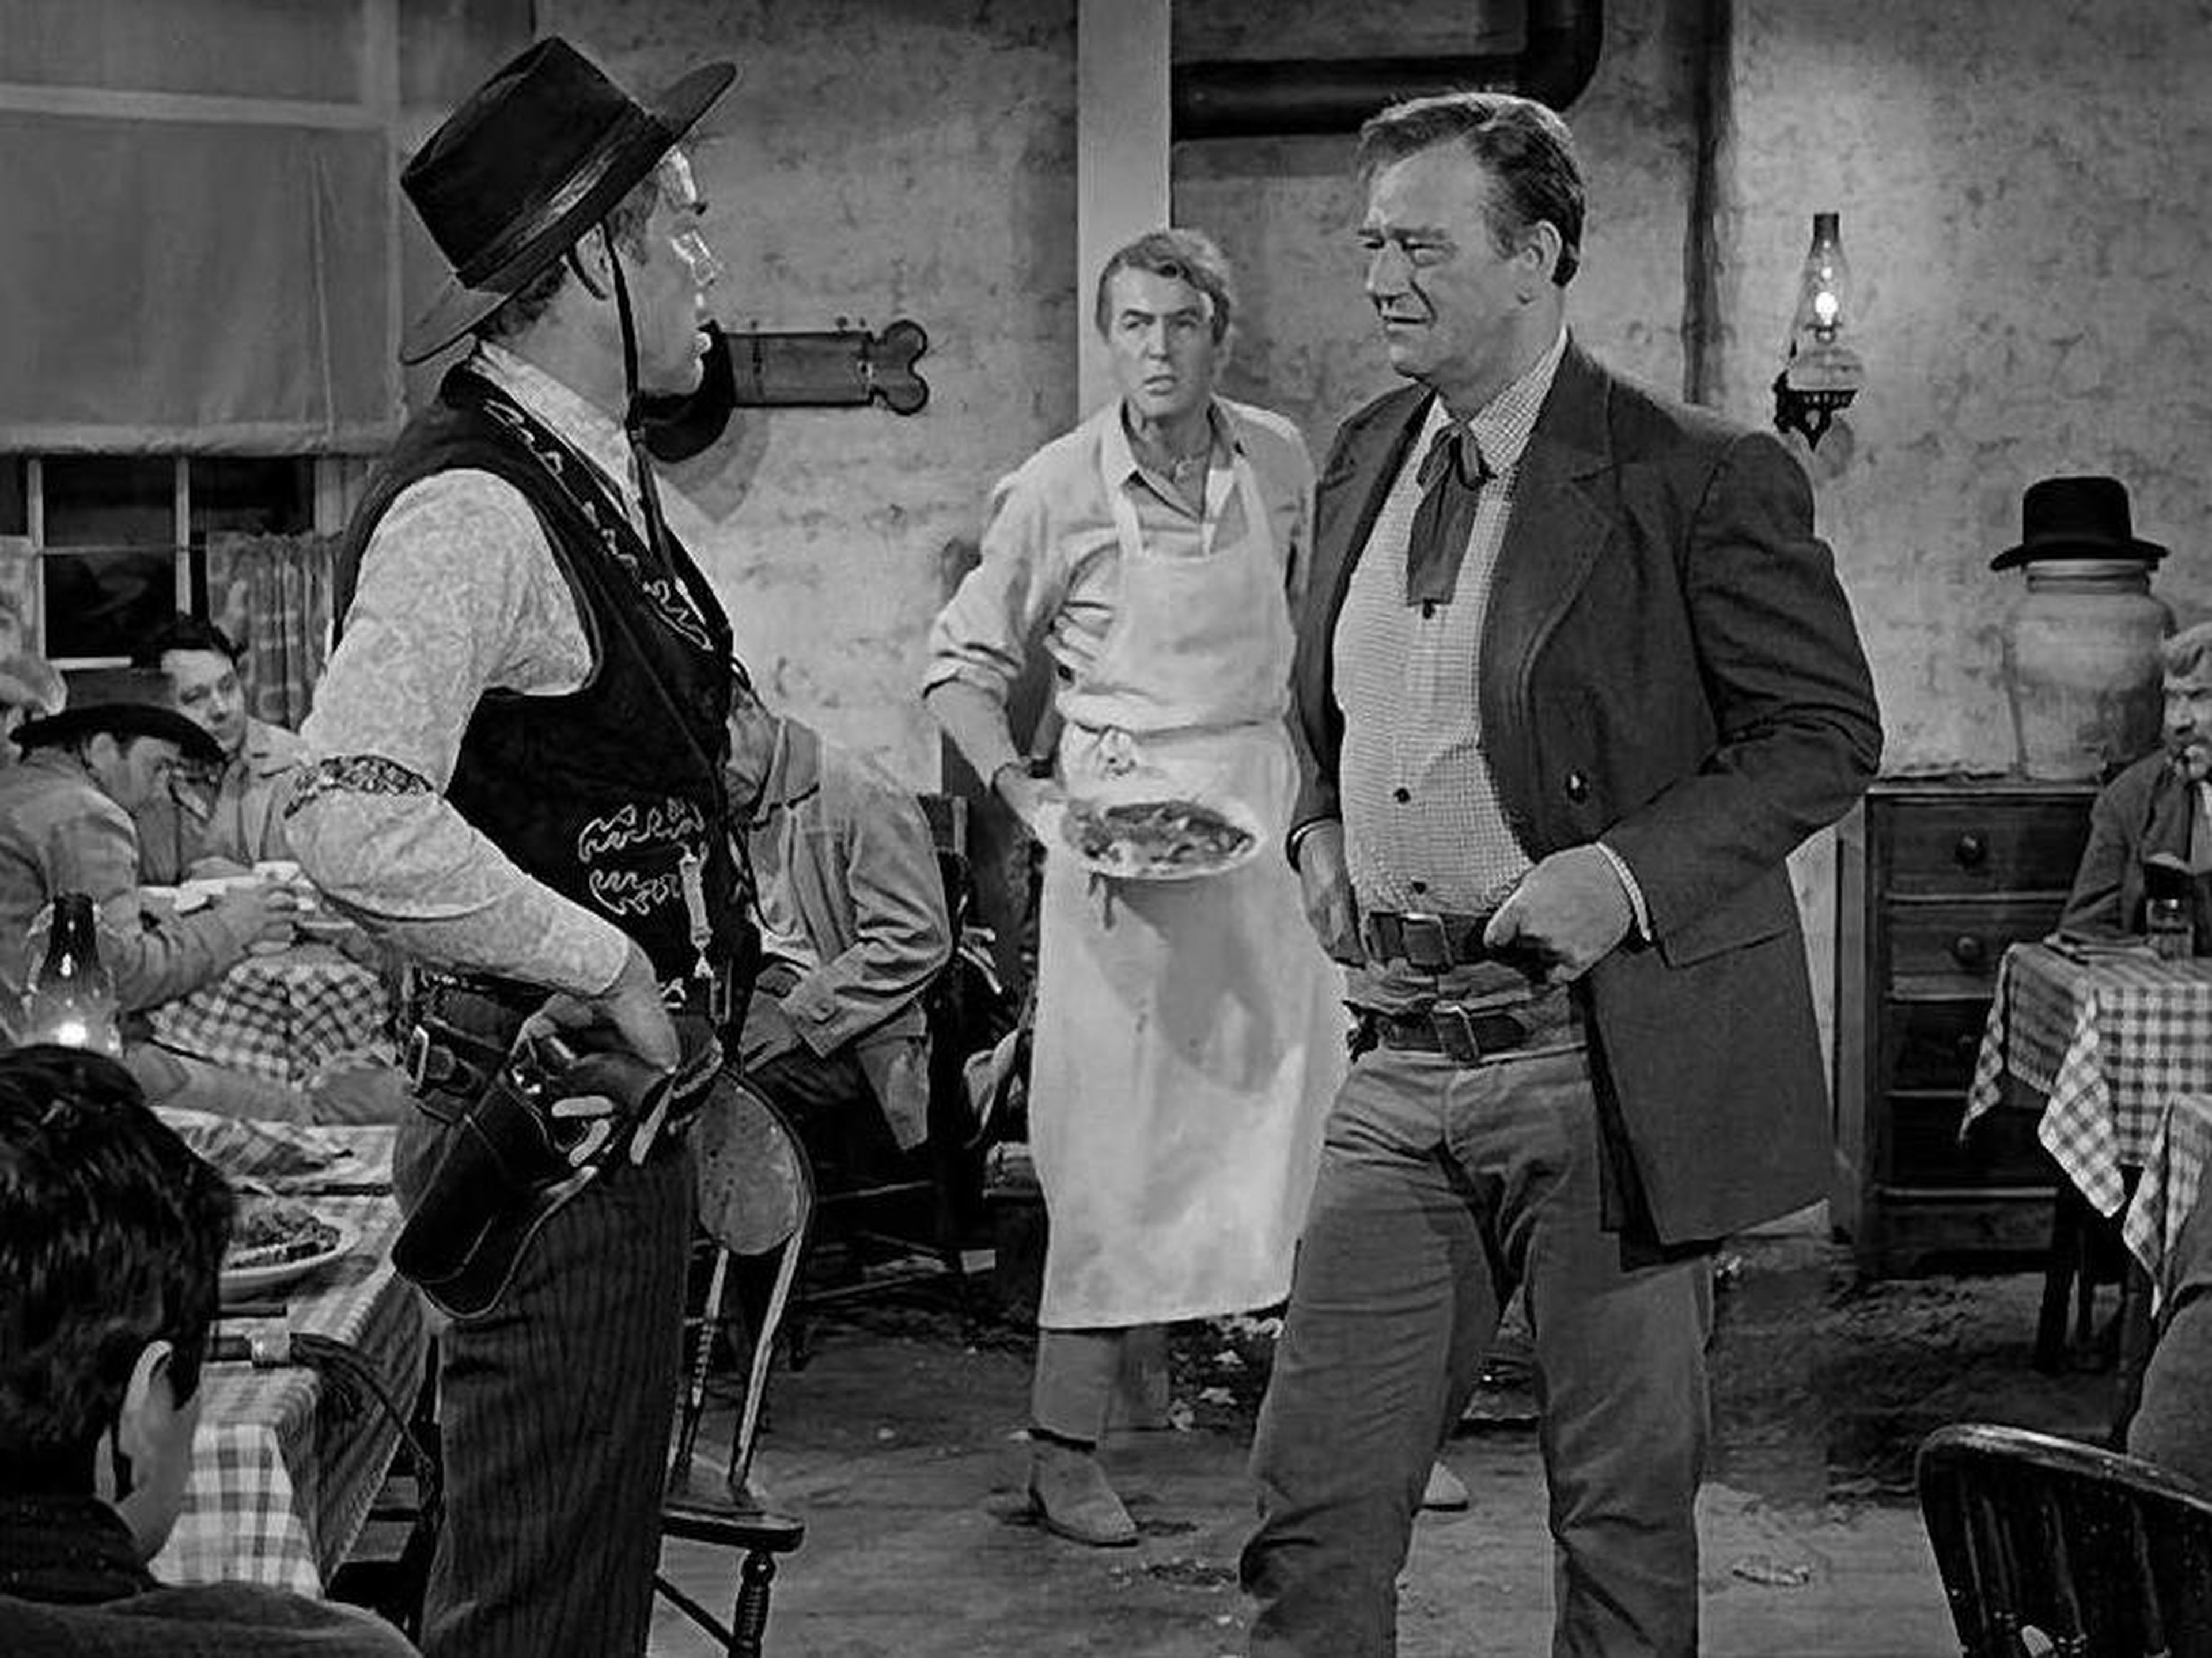 46. "The Man Who Shot Liberty Valance" (1962)